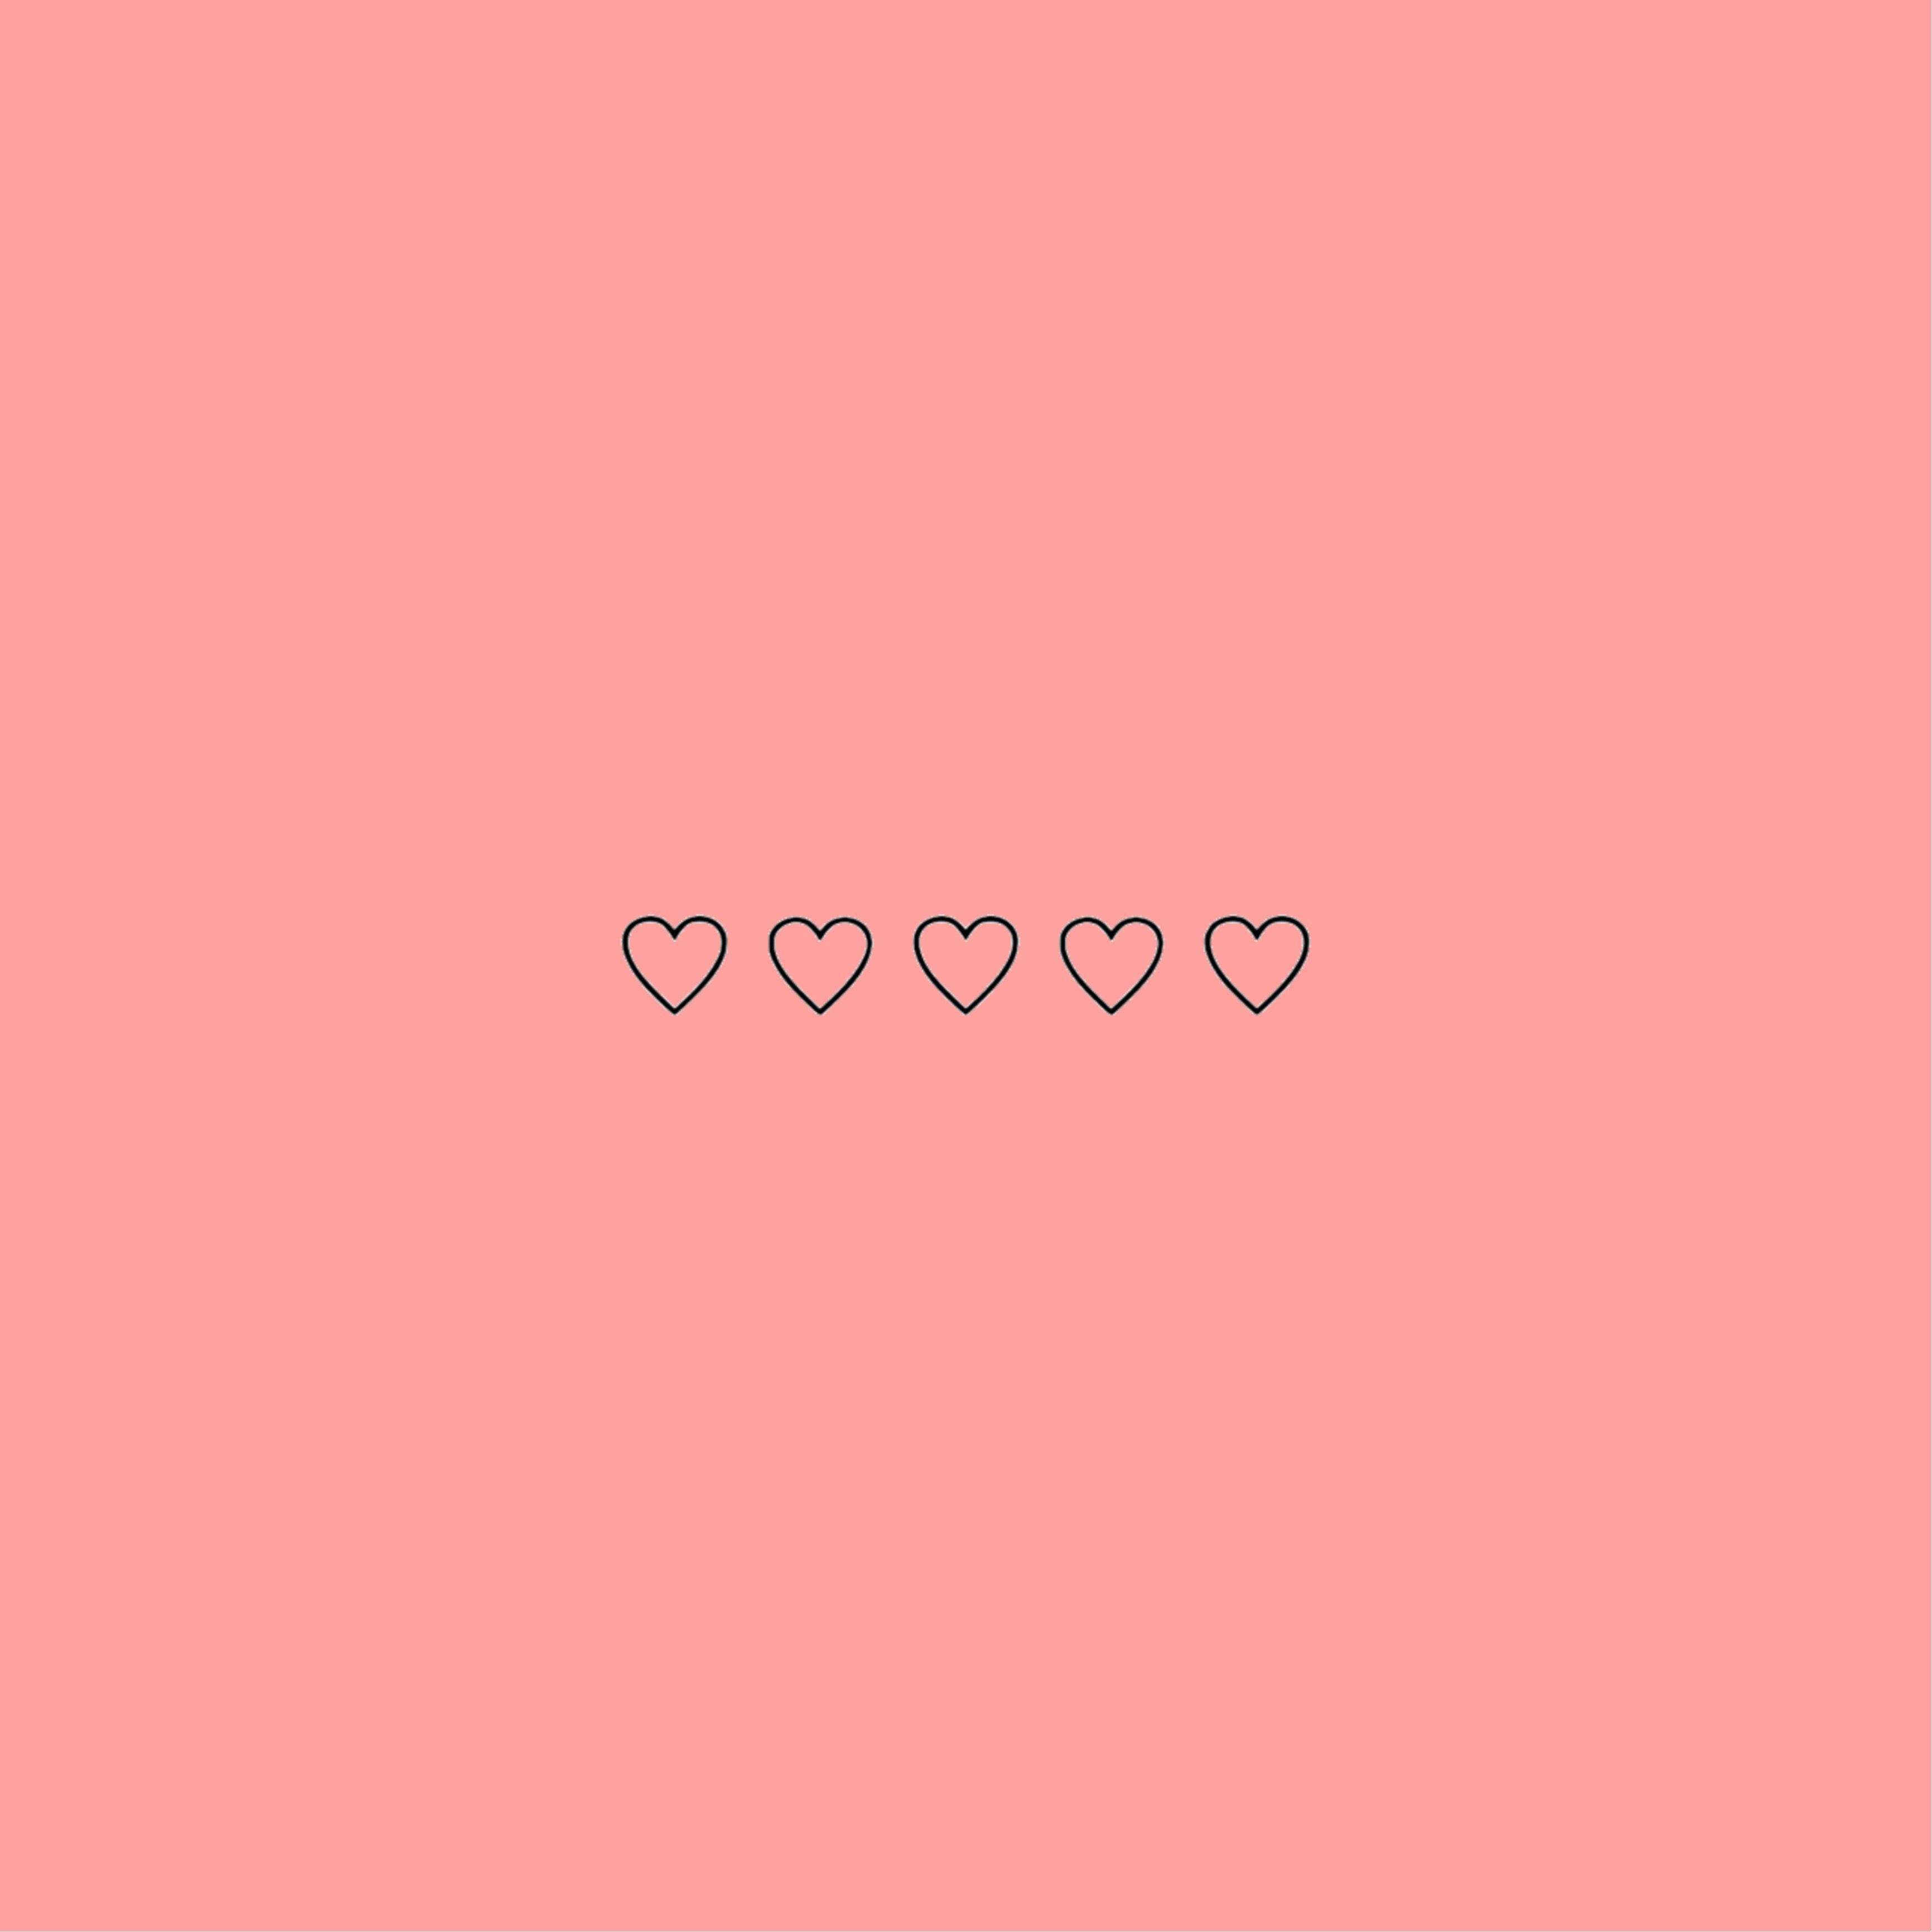 Cute Pink Aesthetic Black Hearts